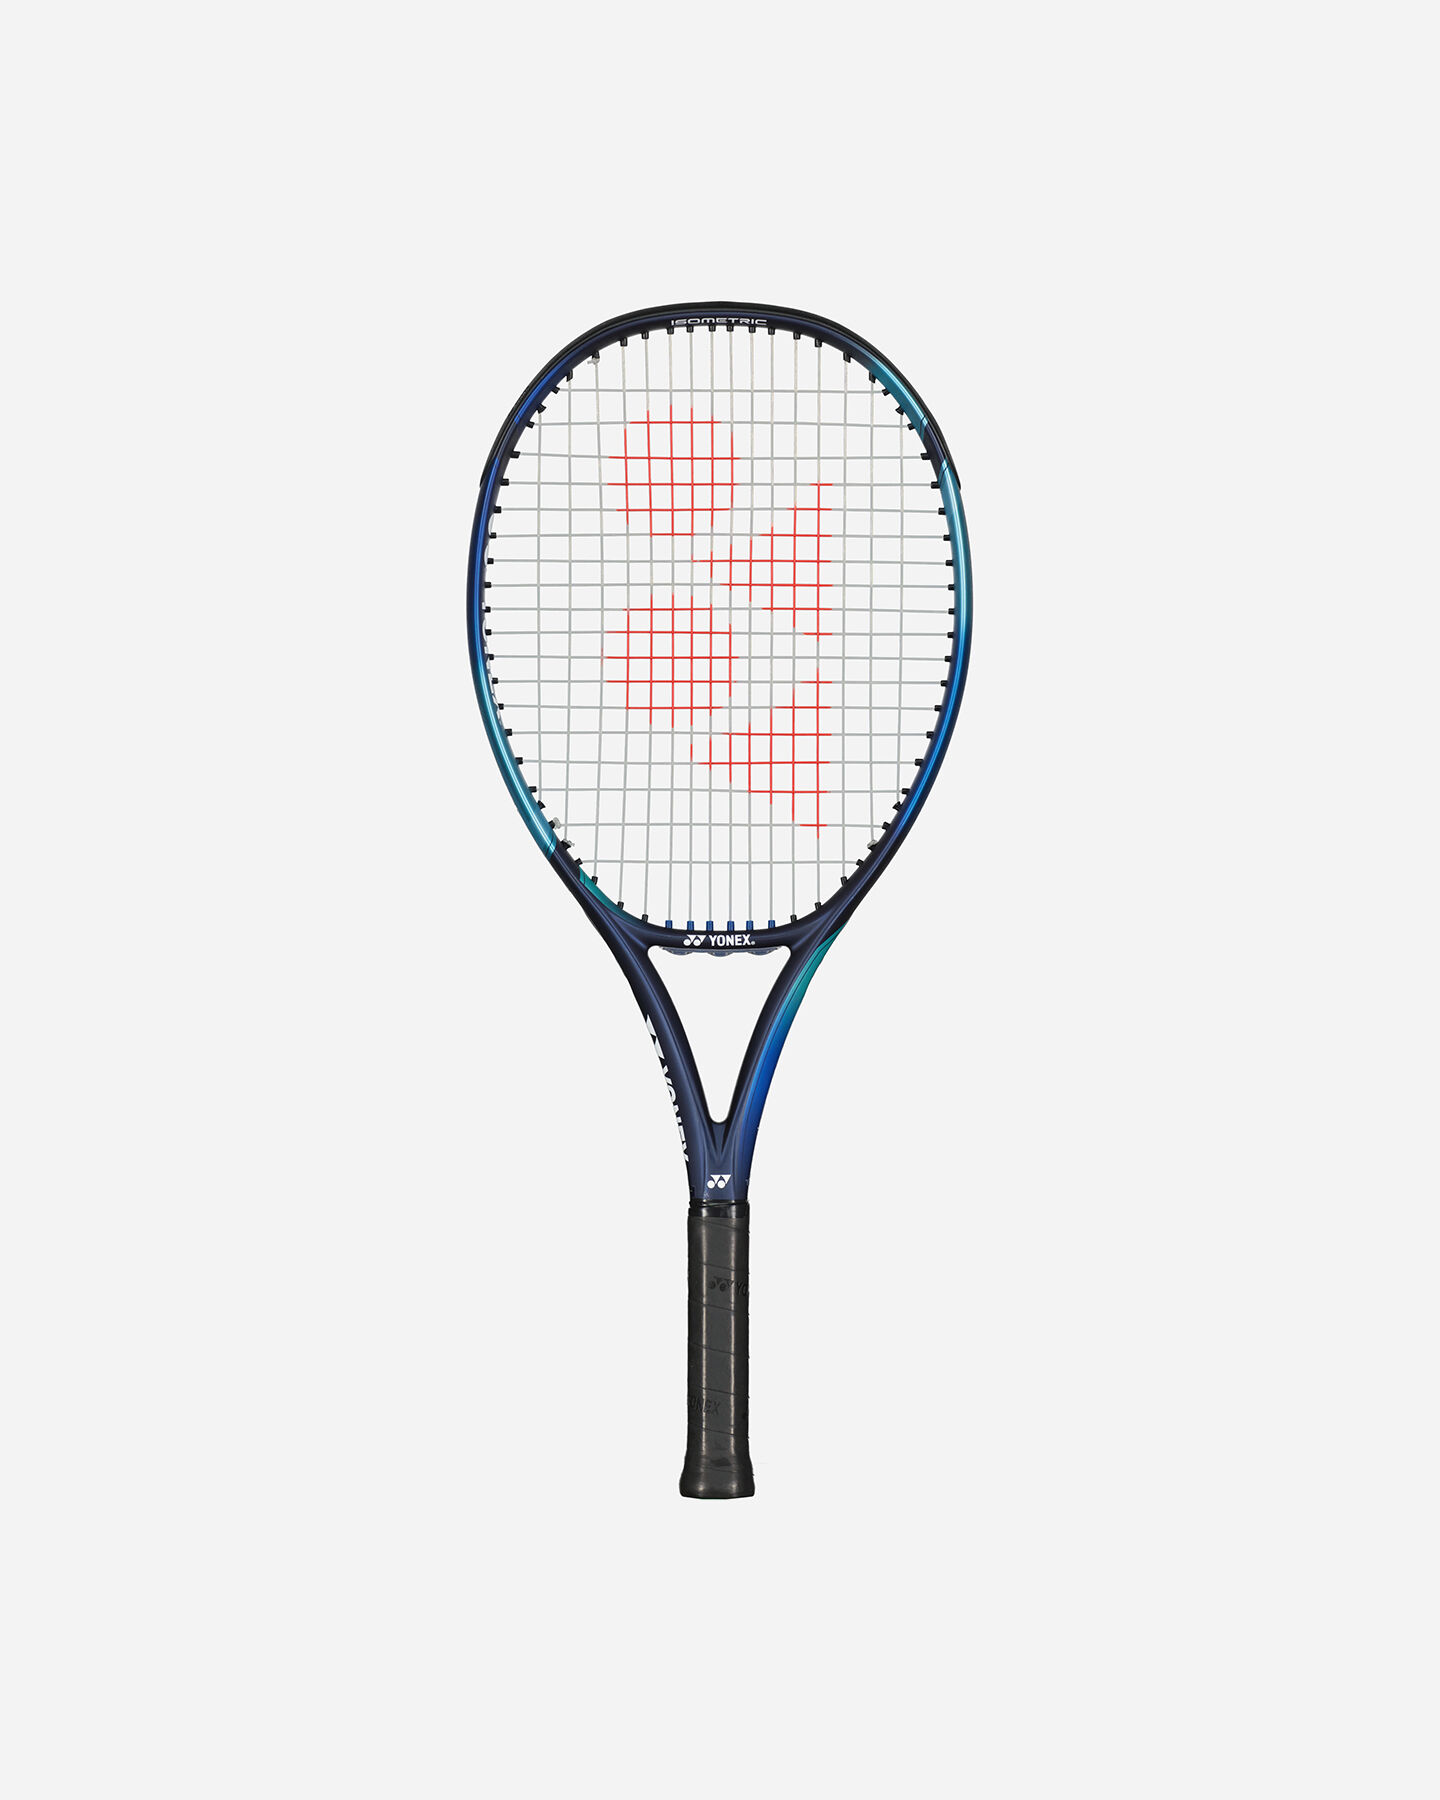  Racchetta tennis YONEX EZONE 25 102-240 G1 JR S4127975|UNI|1 scatto 0